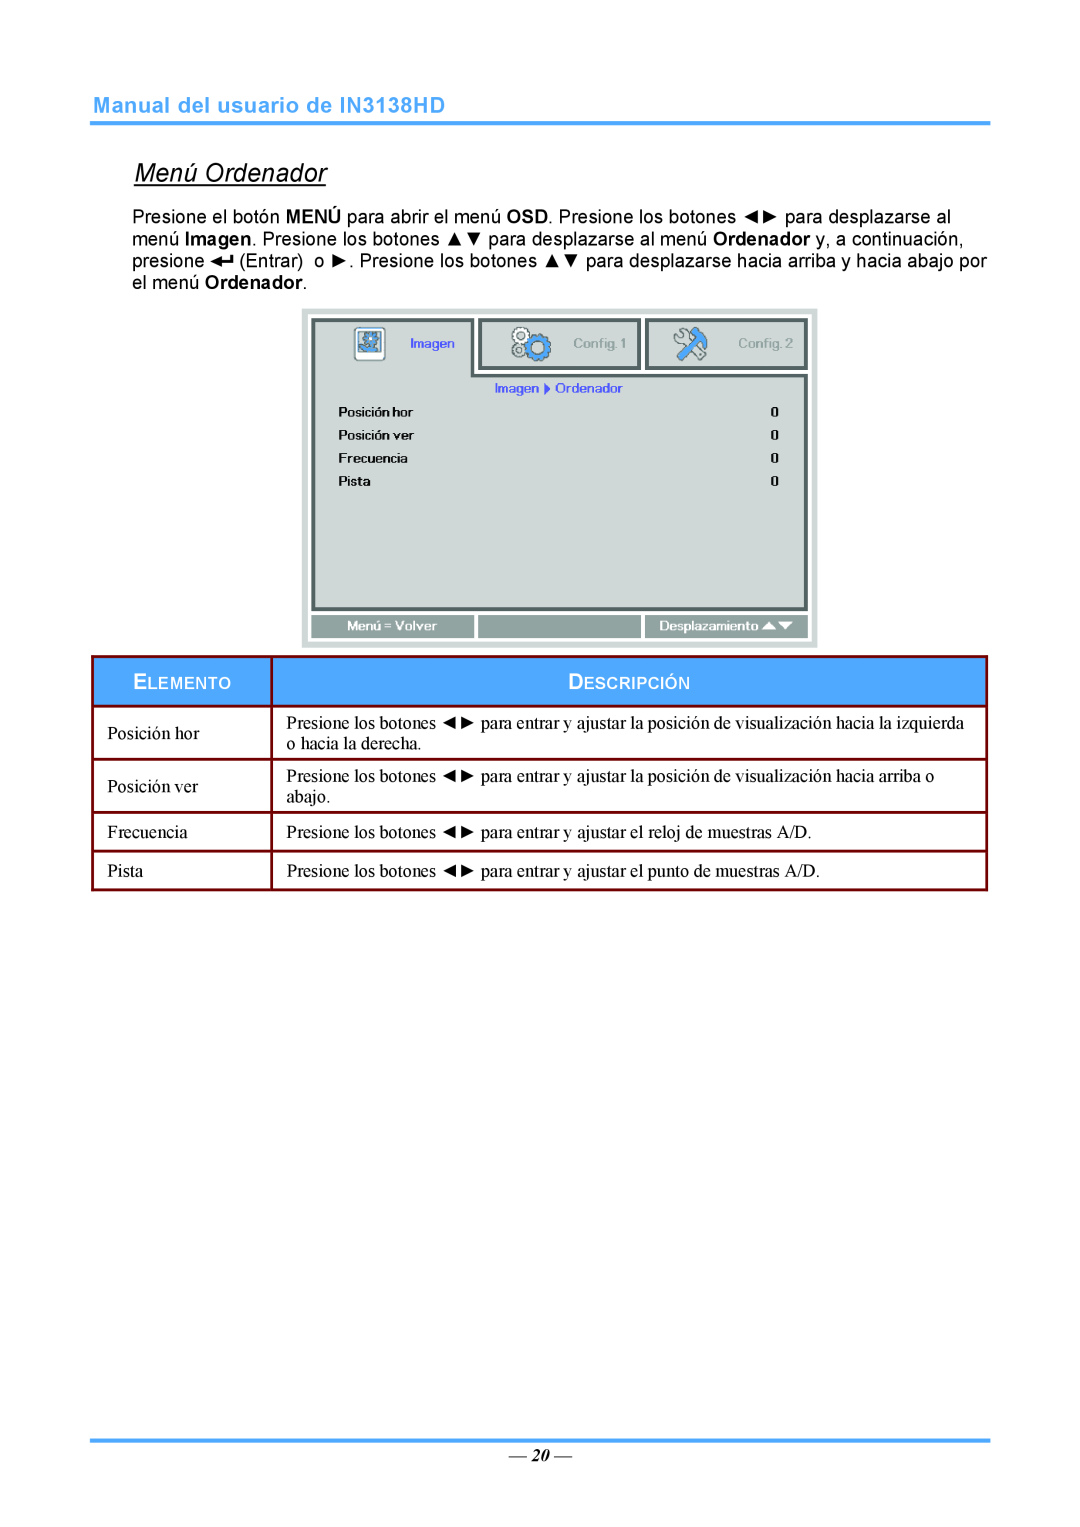 InFocus 3534324301 manual Menú Ordenador, Manual del usuario de IN3138HD 